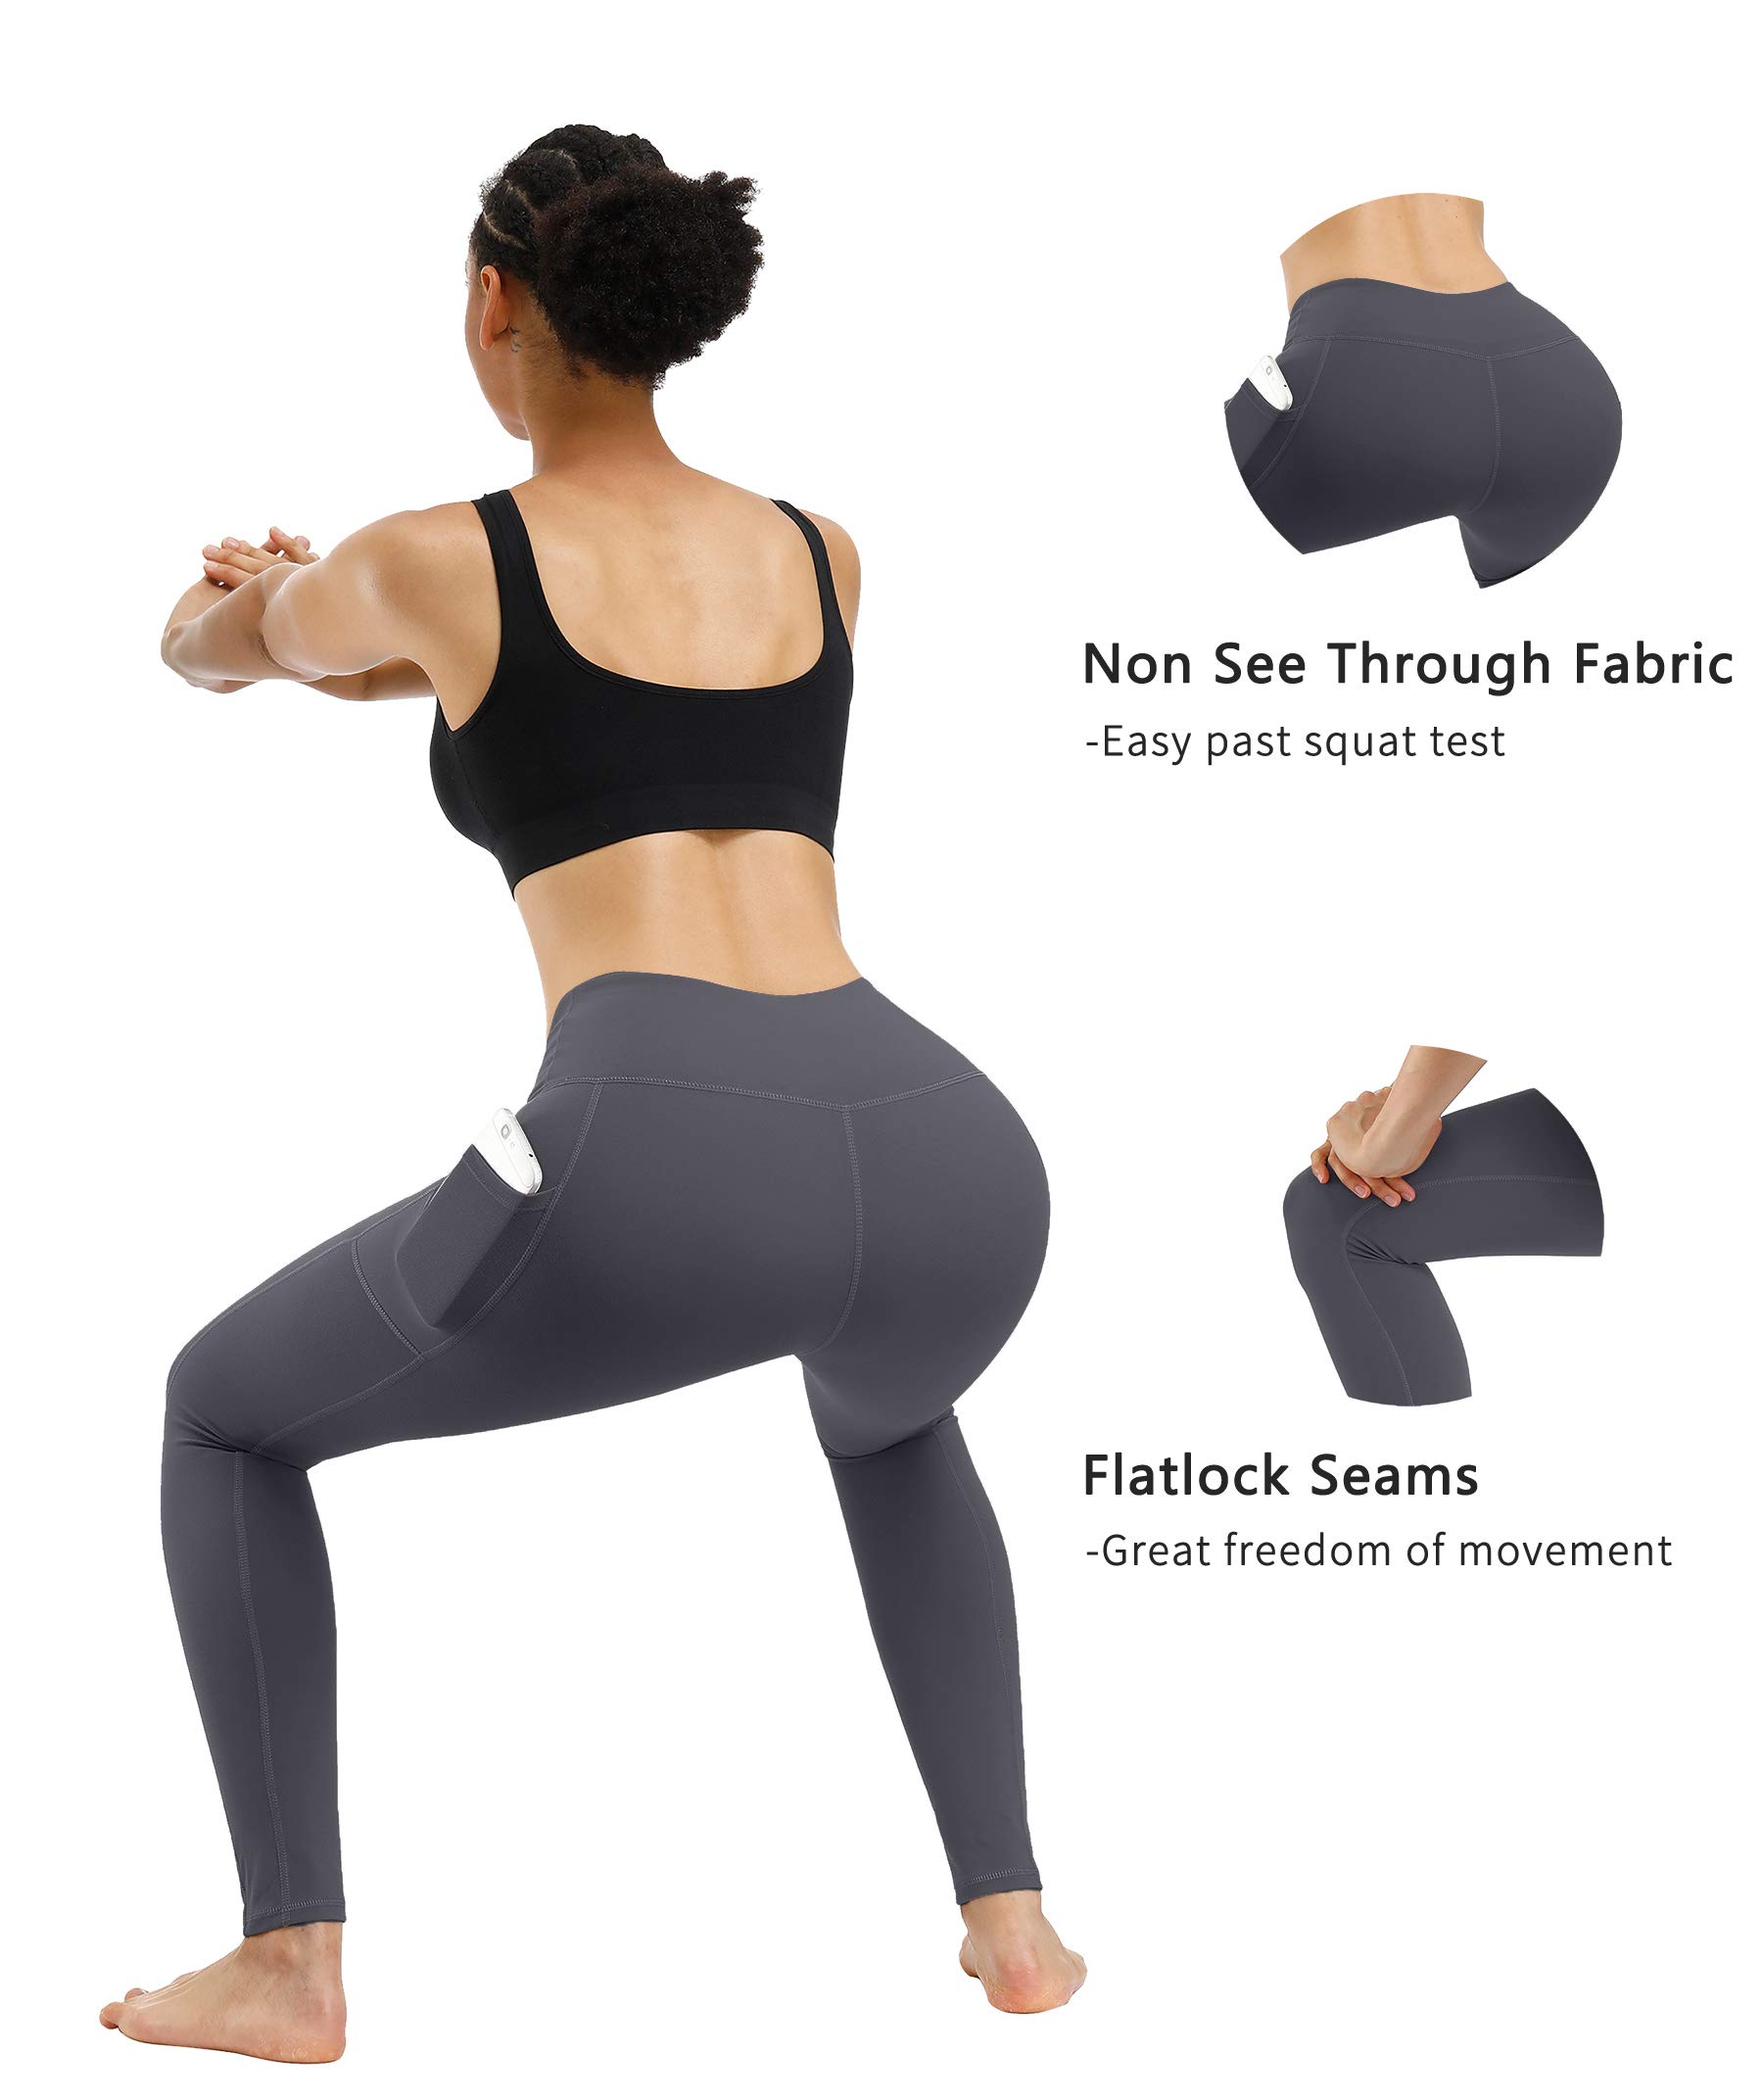 Fengbay 2 Pack High Waist Yoga Pants, Pocket Yoga Pants Tummy Control Workout Running 4 Way Stretch Yoga Leggings